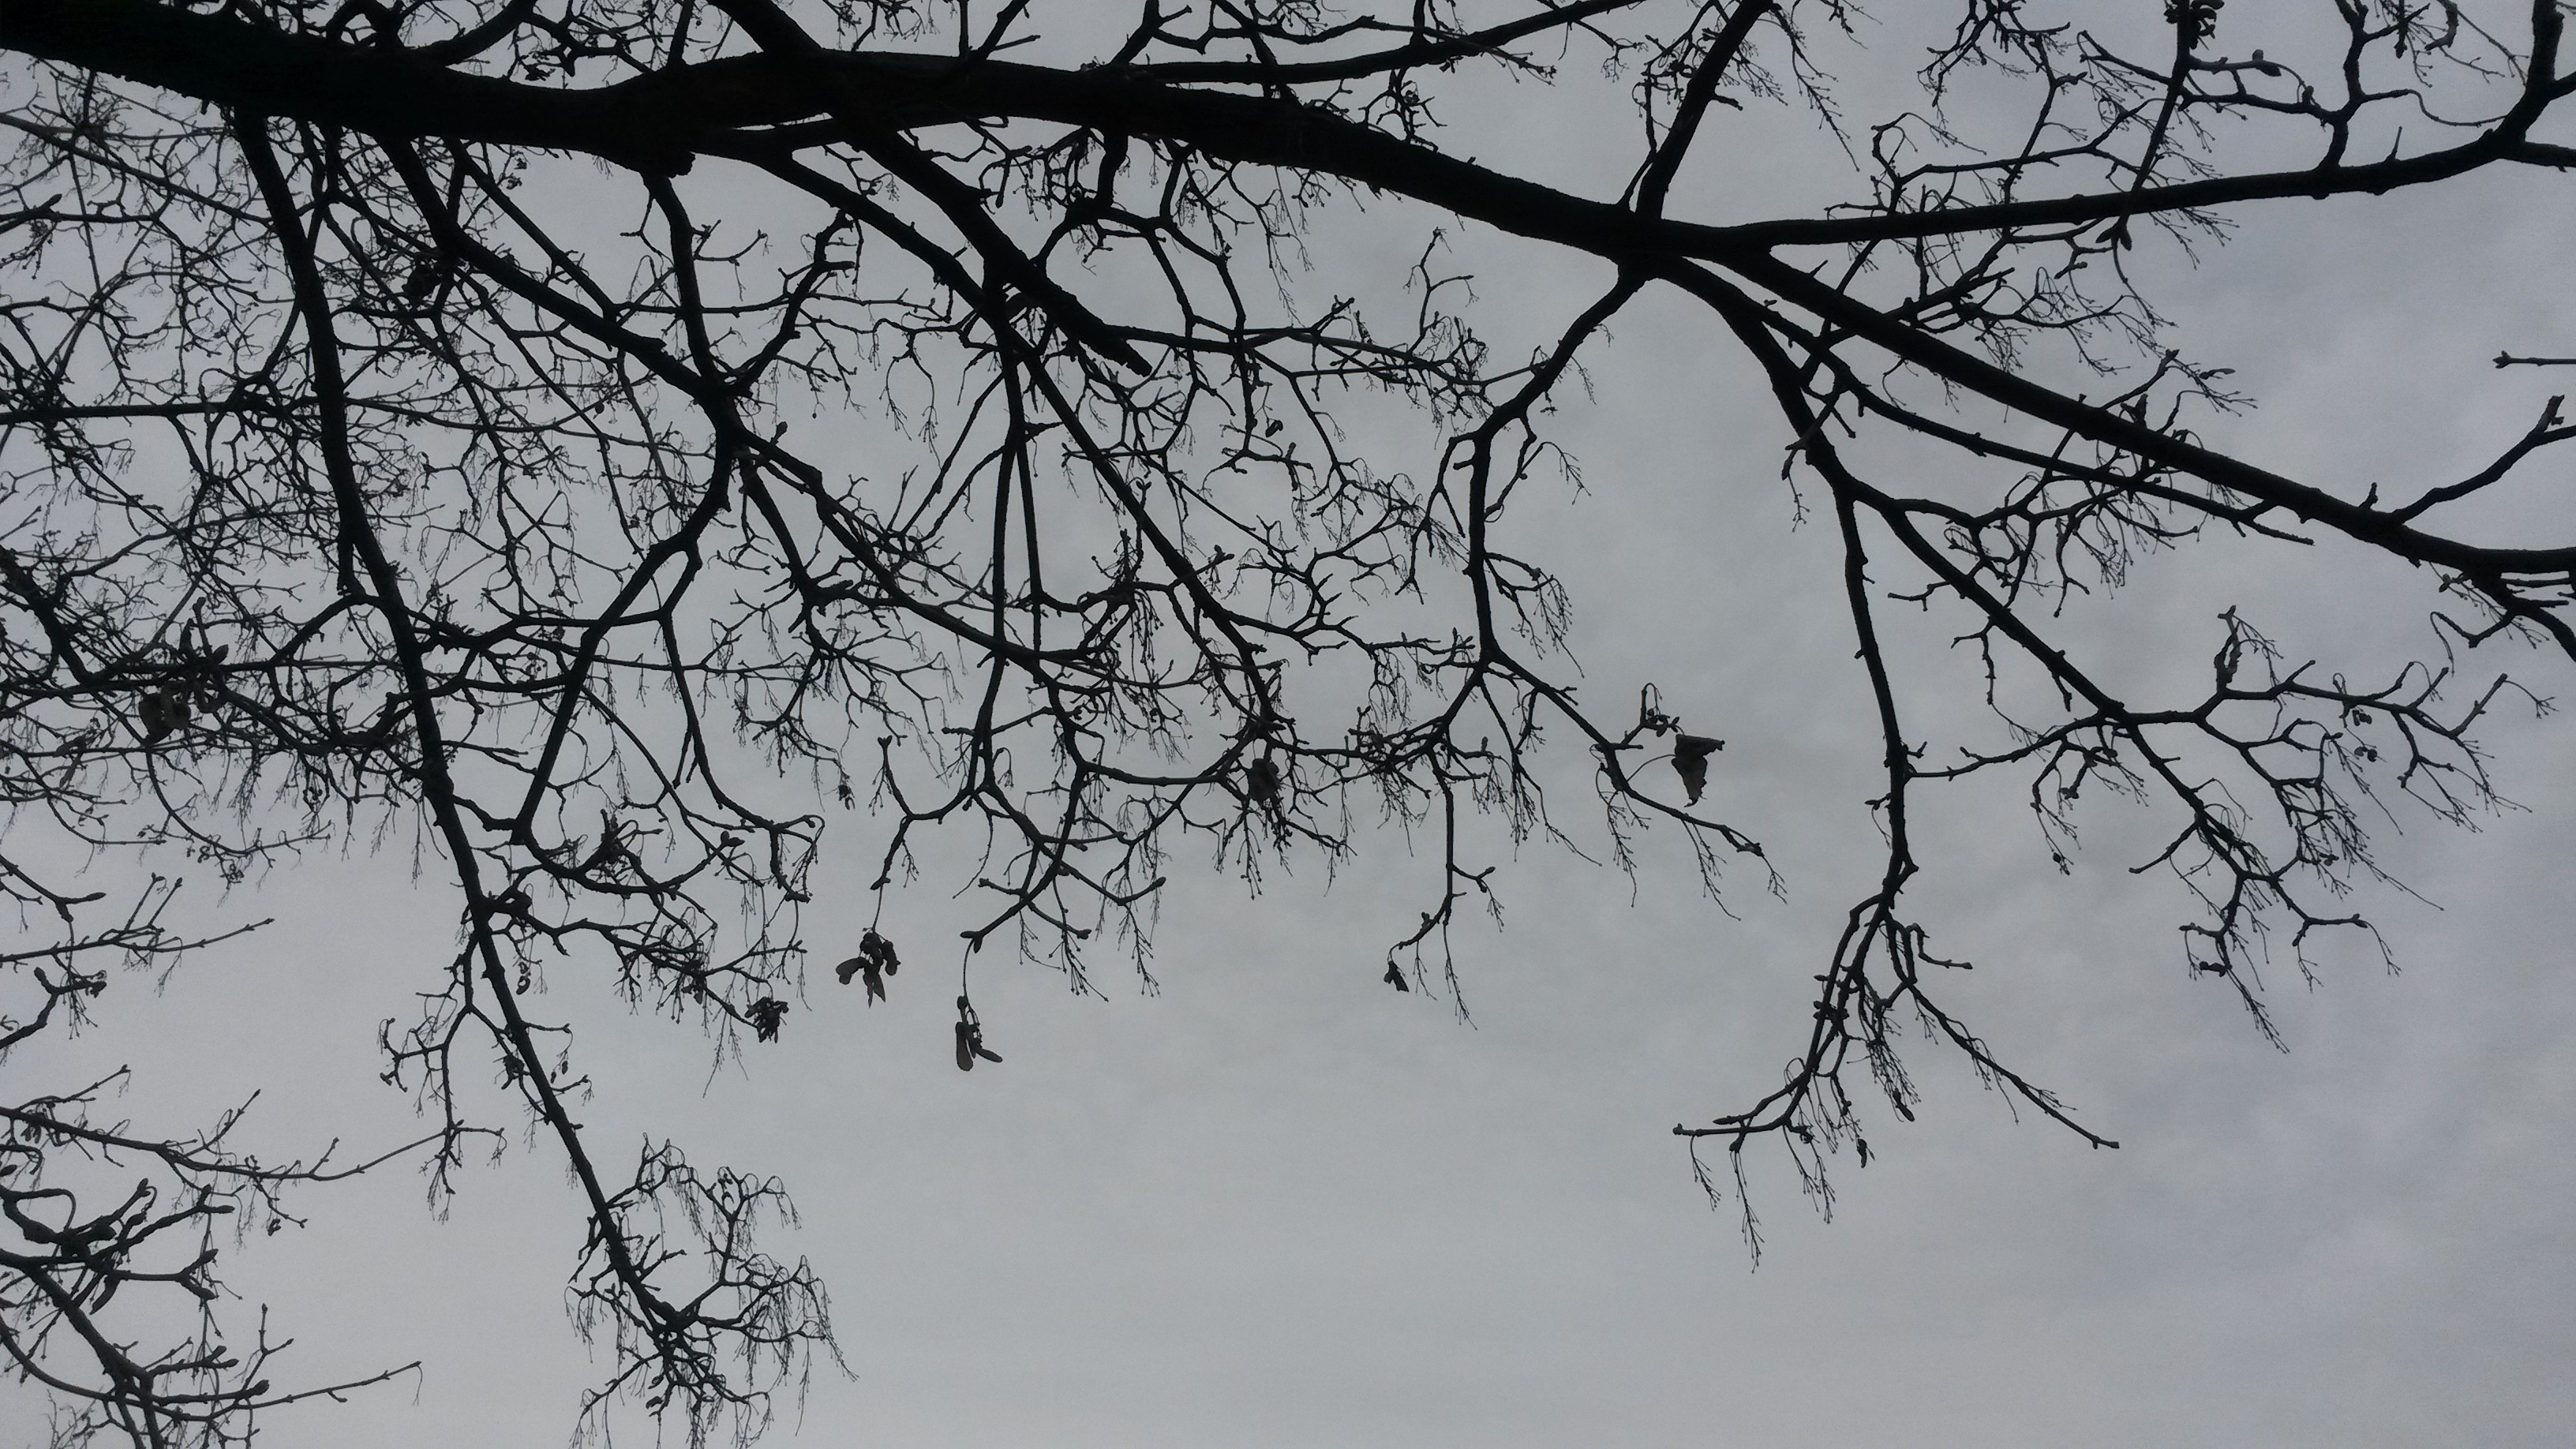 General 3264x1836 trees branch winter sky gray gloomy overcast